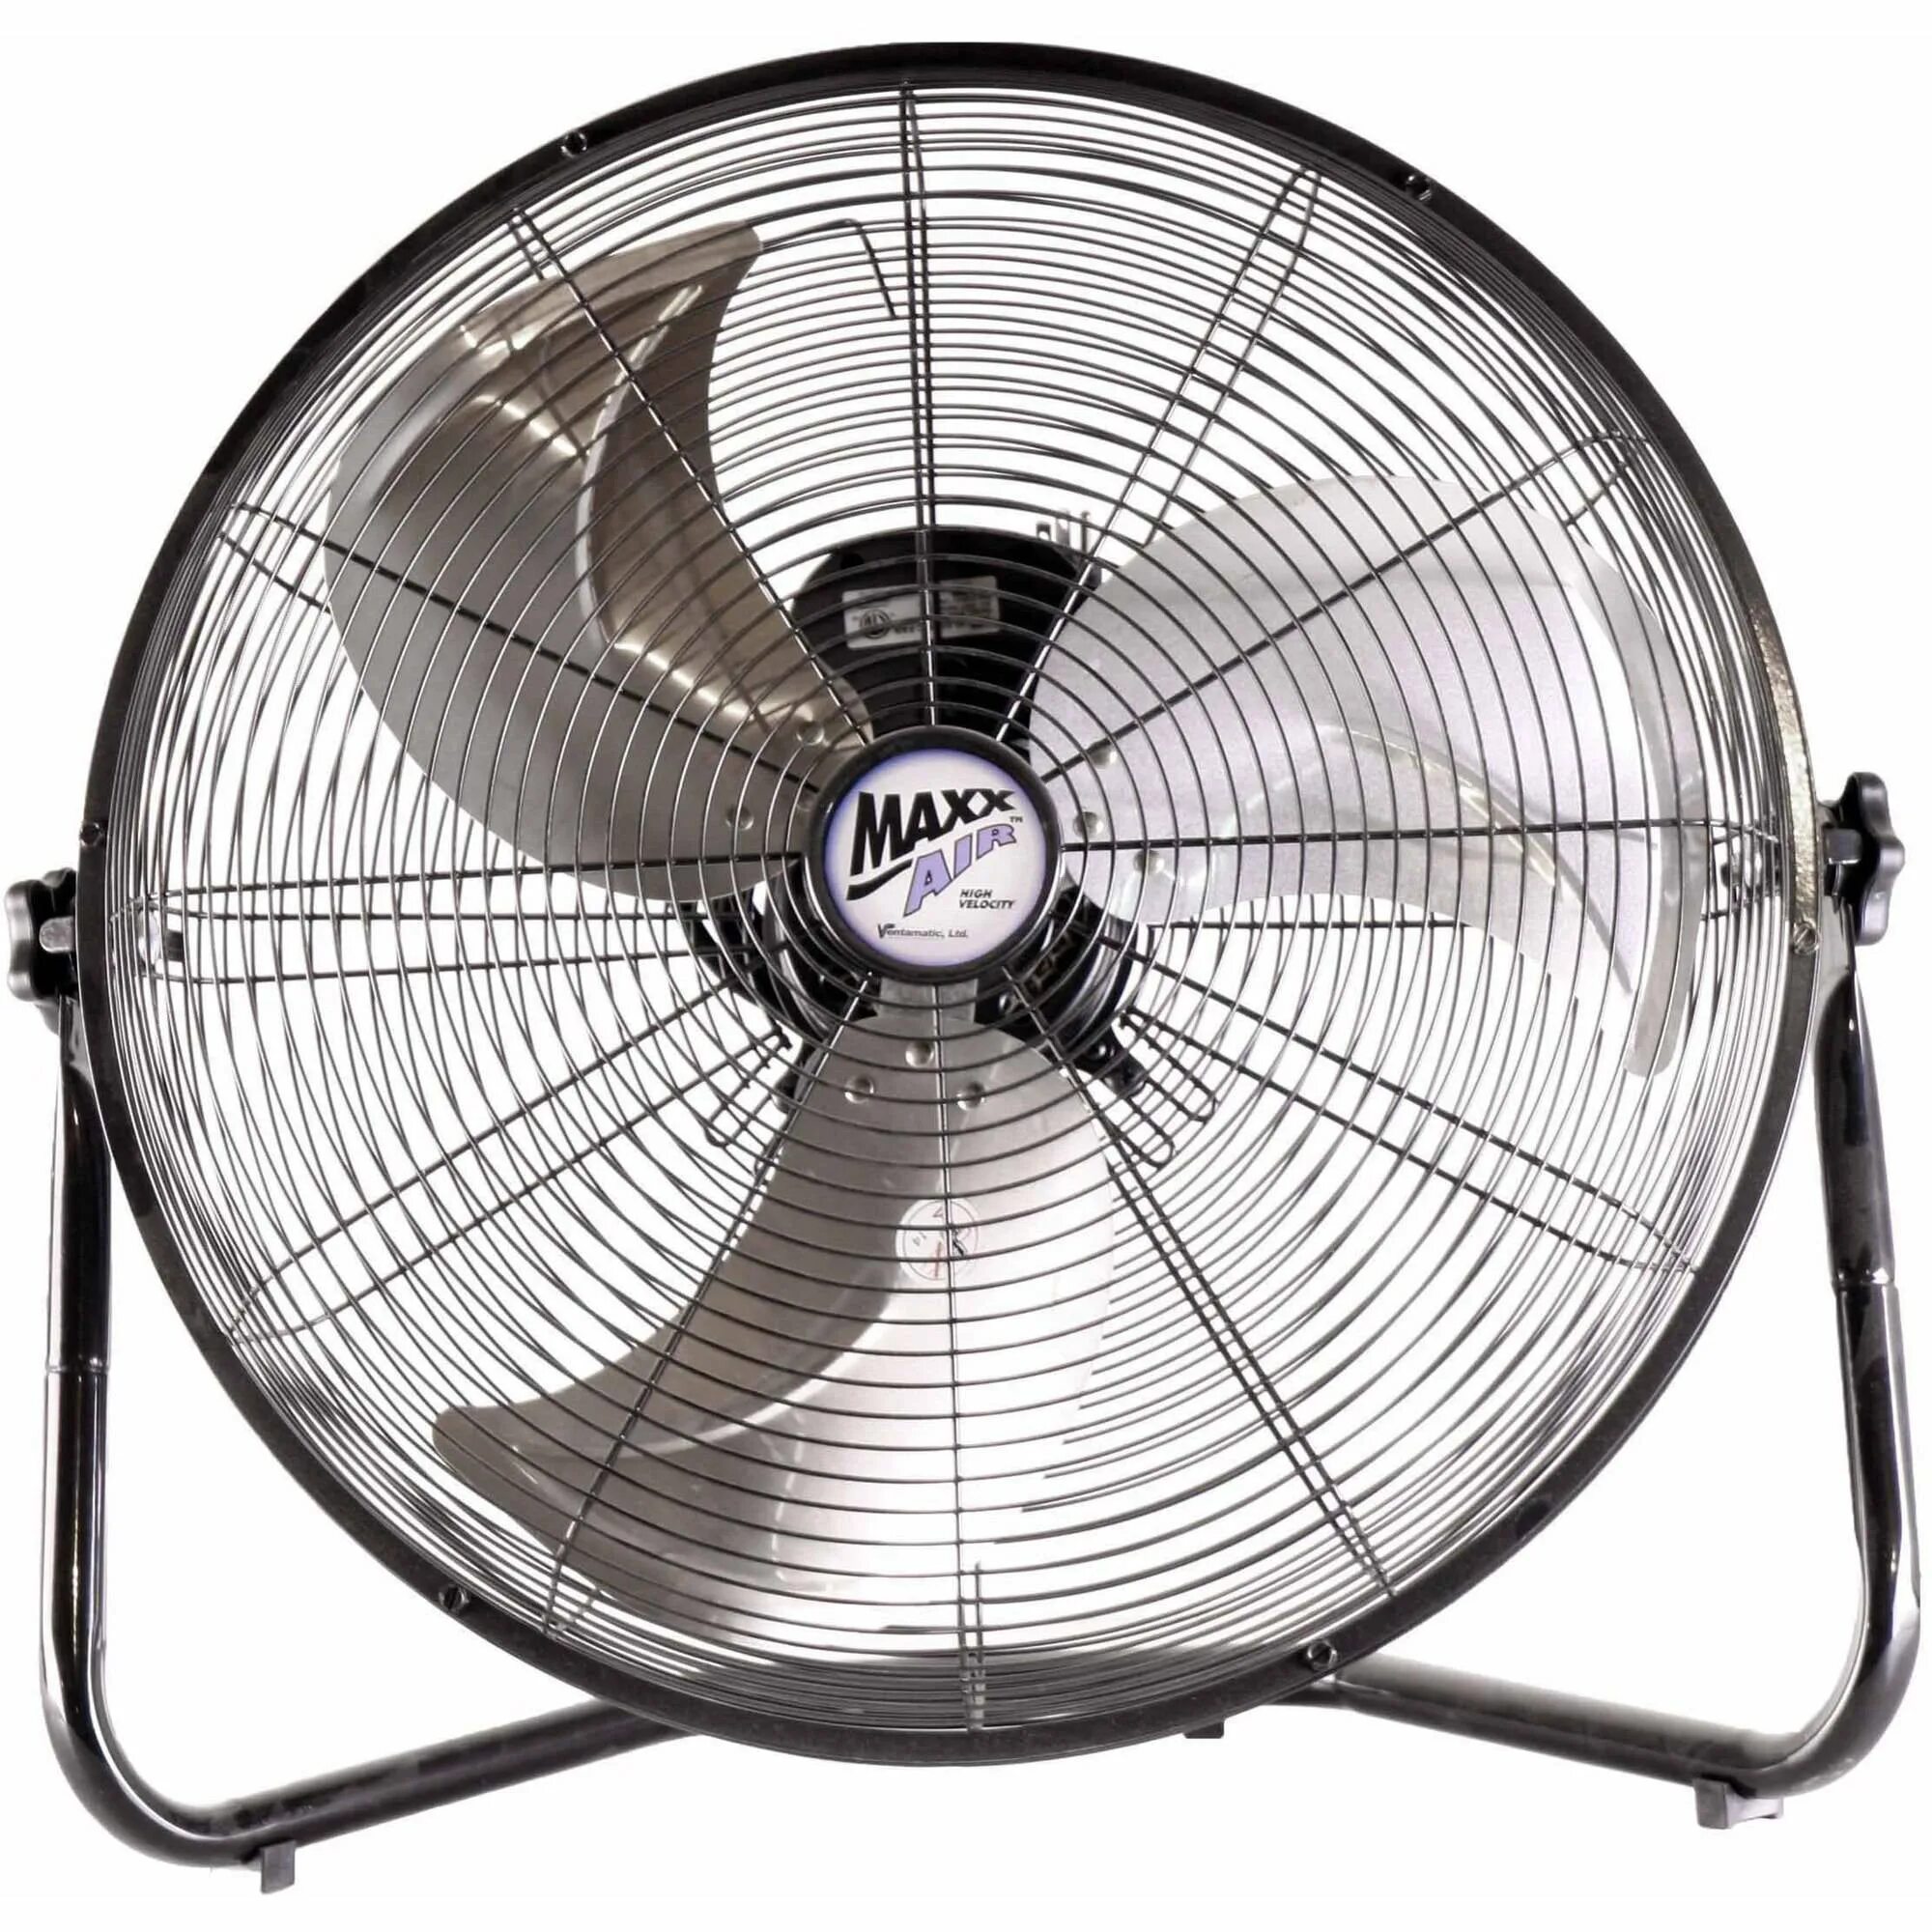 Your biggest fan. Вентилятор GBP Hungary 13v. Воздушный вентилятор. Вентилятор для сушилки. Вентилятор дешевый.